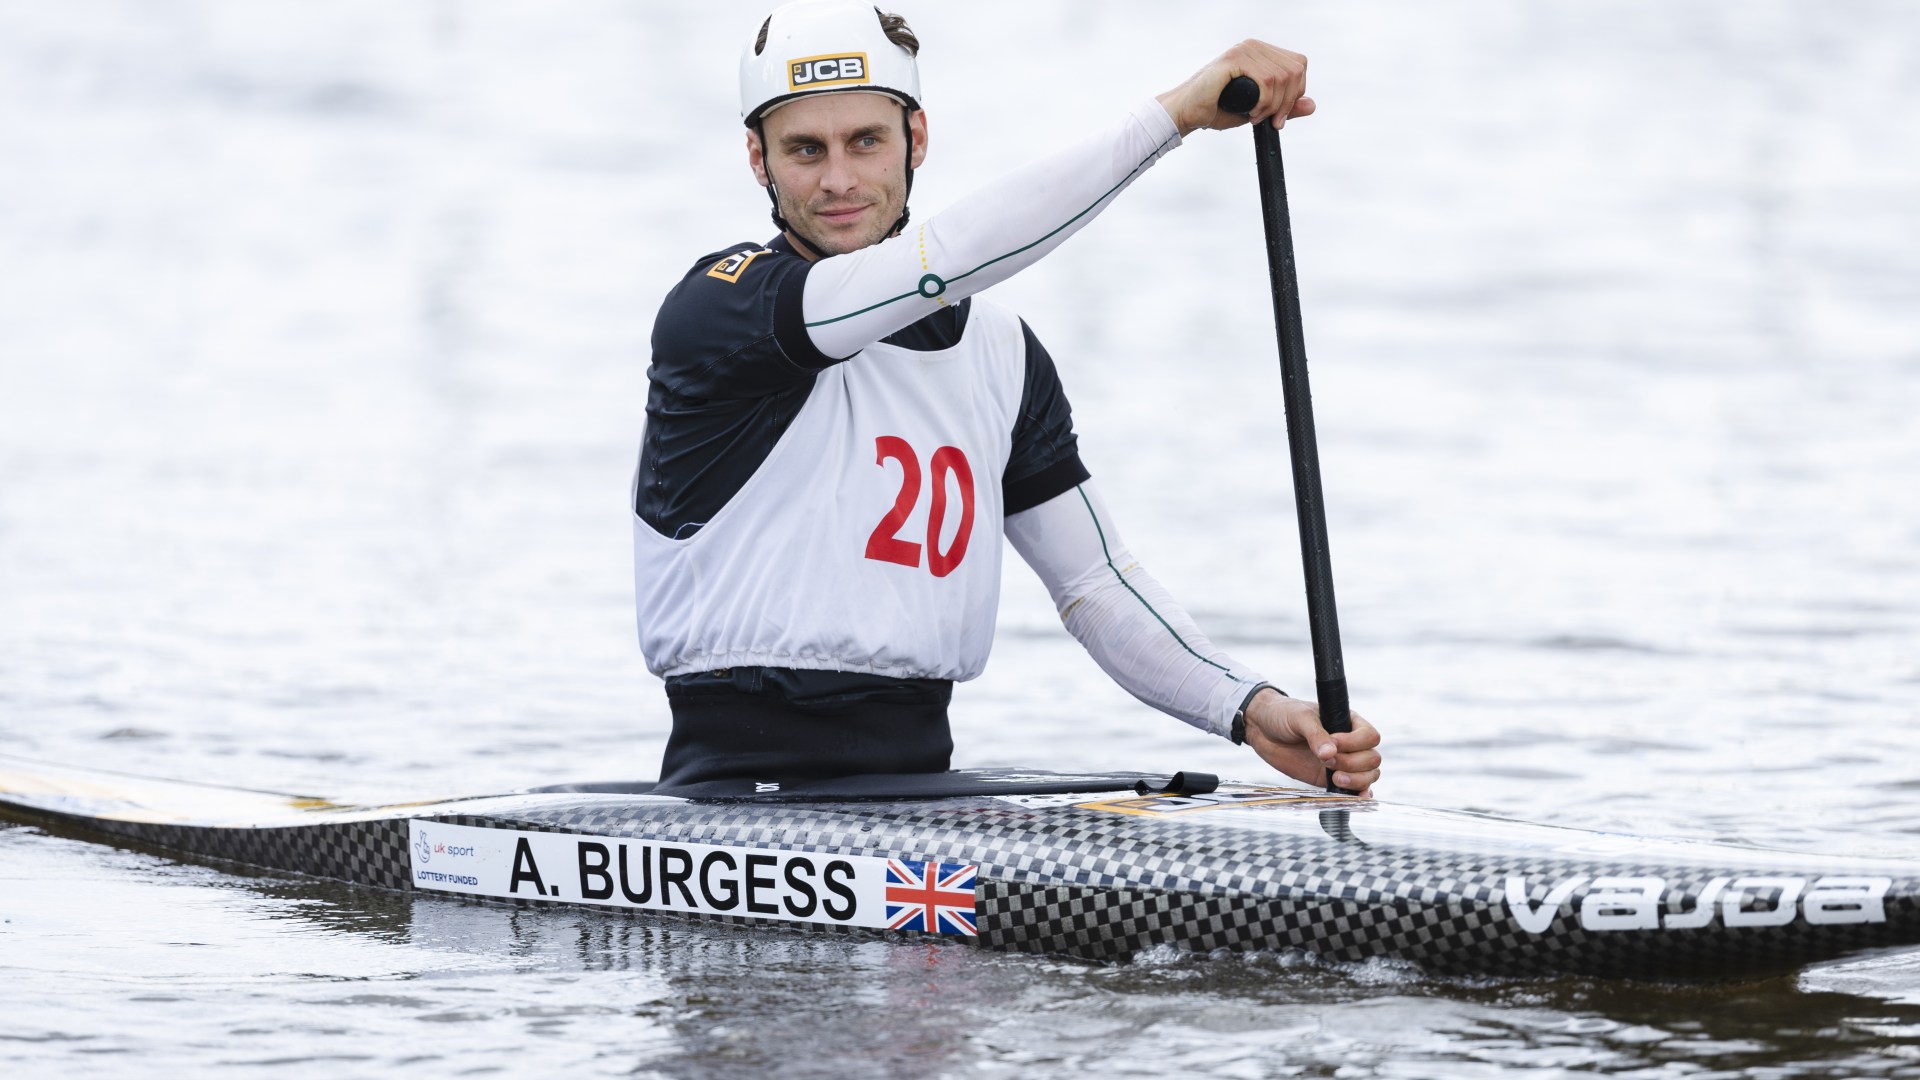 Meet Adam Burgess, Team GB canoe slalom athlete at Paris 2024 Olympics who has qualifications in coffee brewing [Video]